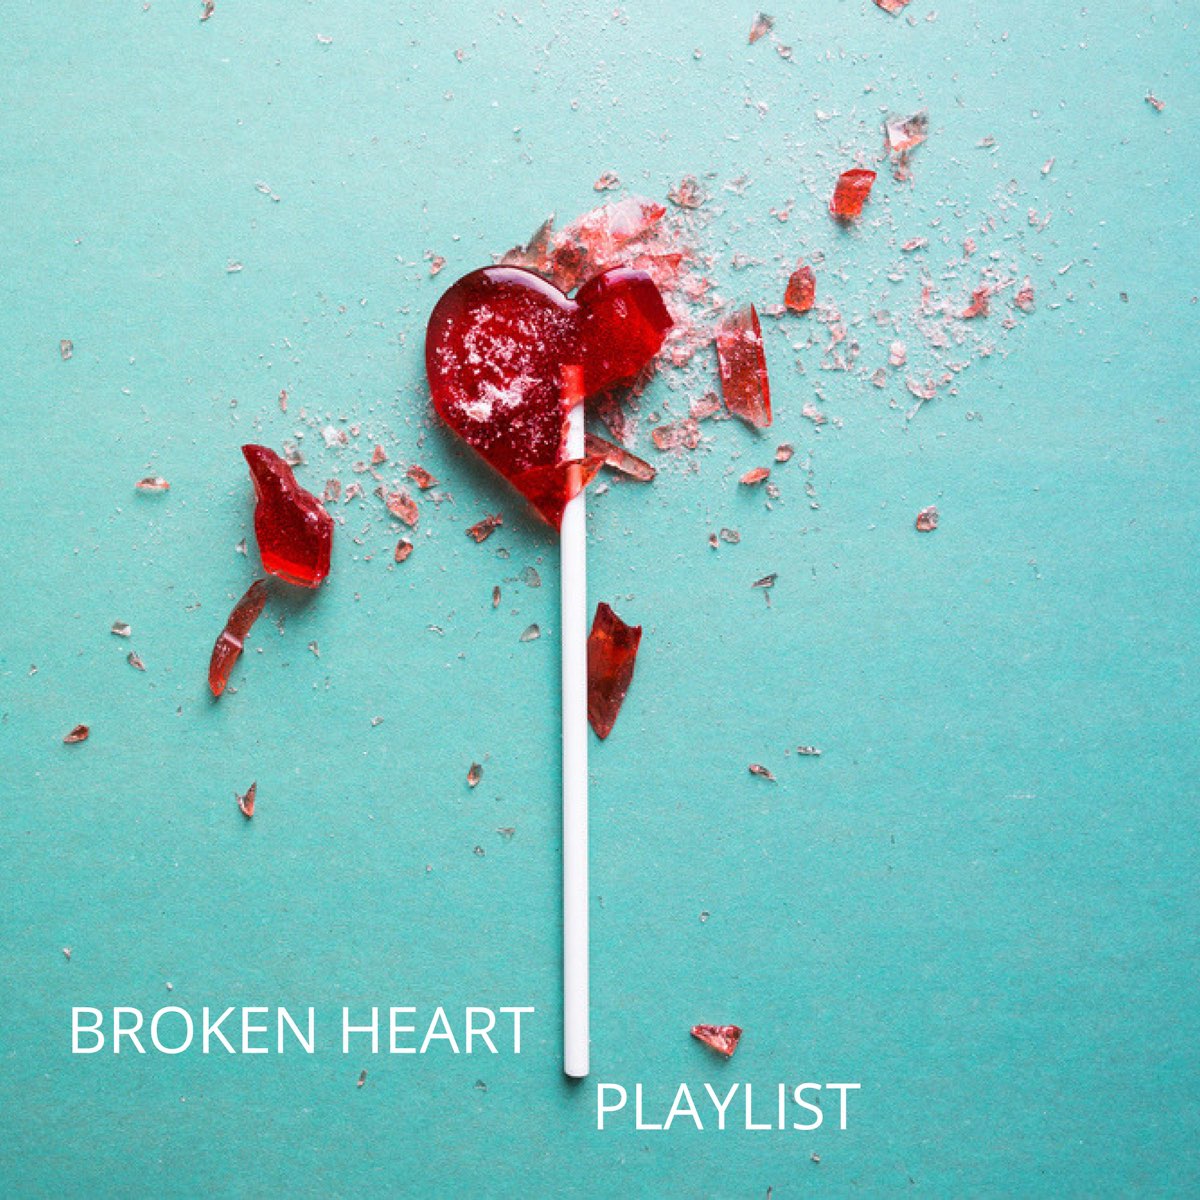 ‎Broken Heart Playlist by Various Artists on Apple Music